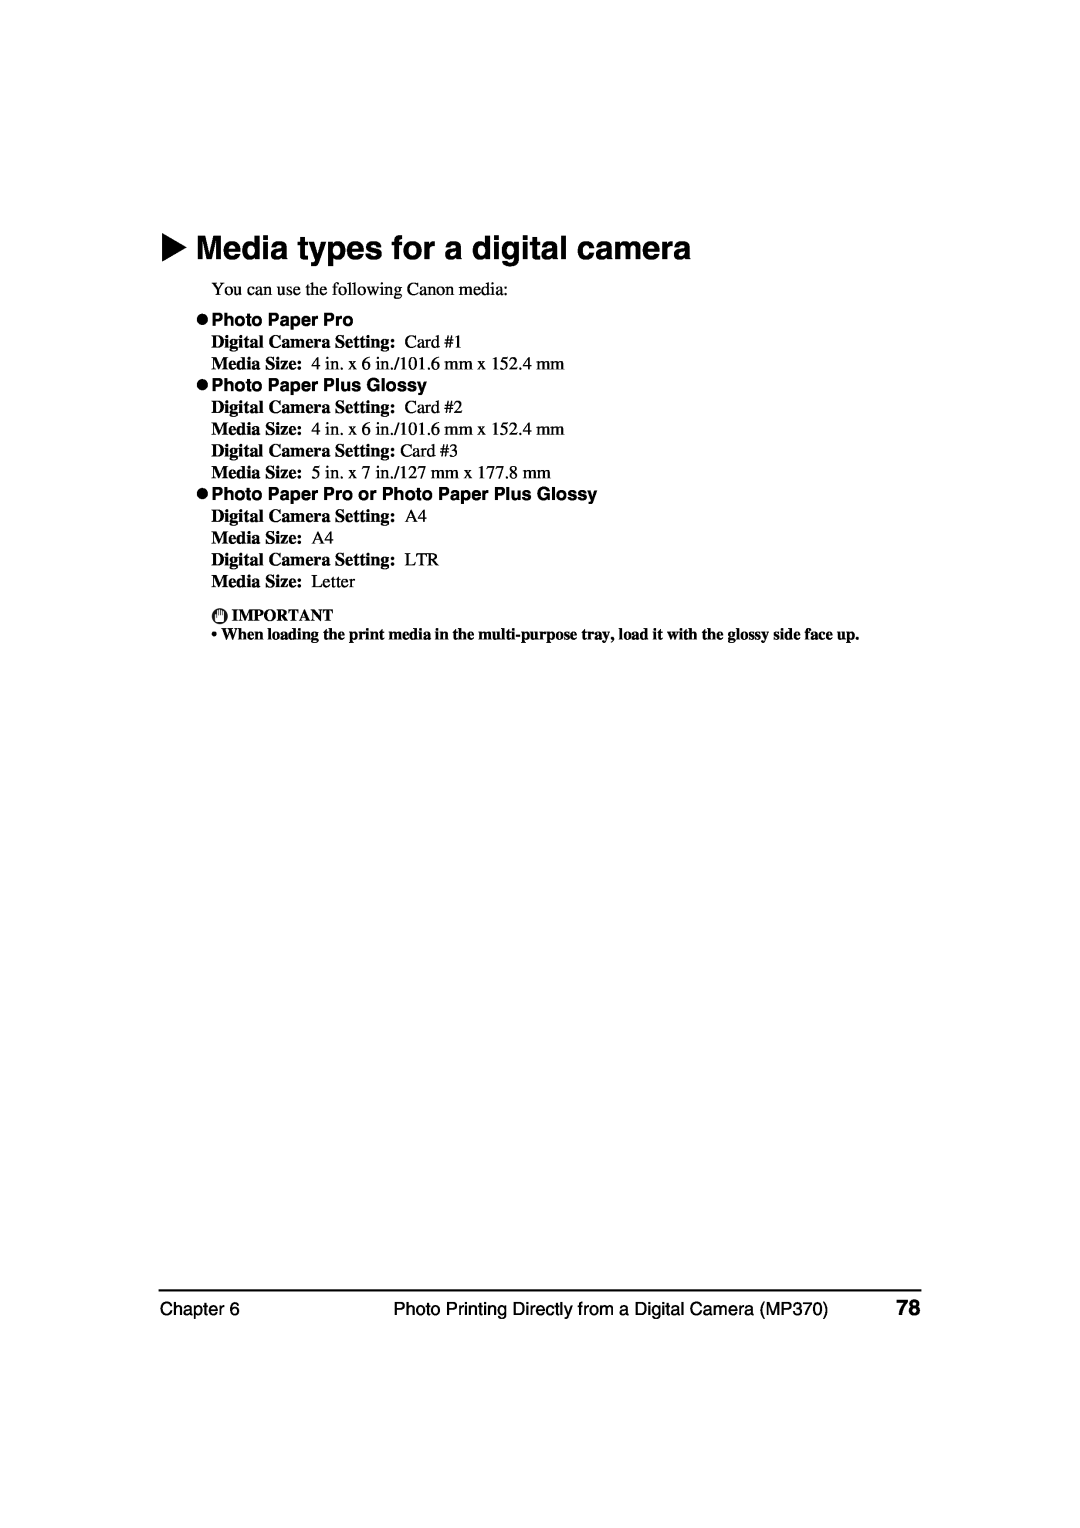 Canon MP360 Media types for a digital camera, z Photo Paper Pro, Digital Camera Setting Card #1, z Photo Paper Plus Glossy 